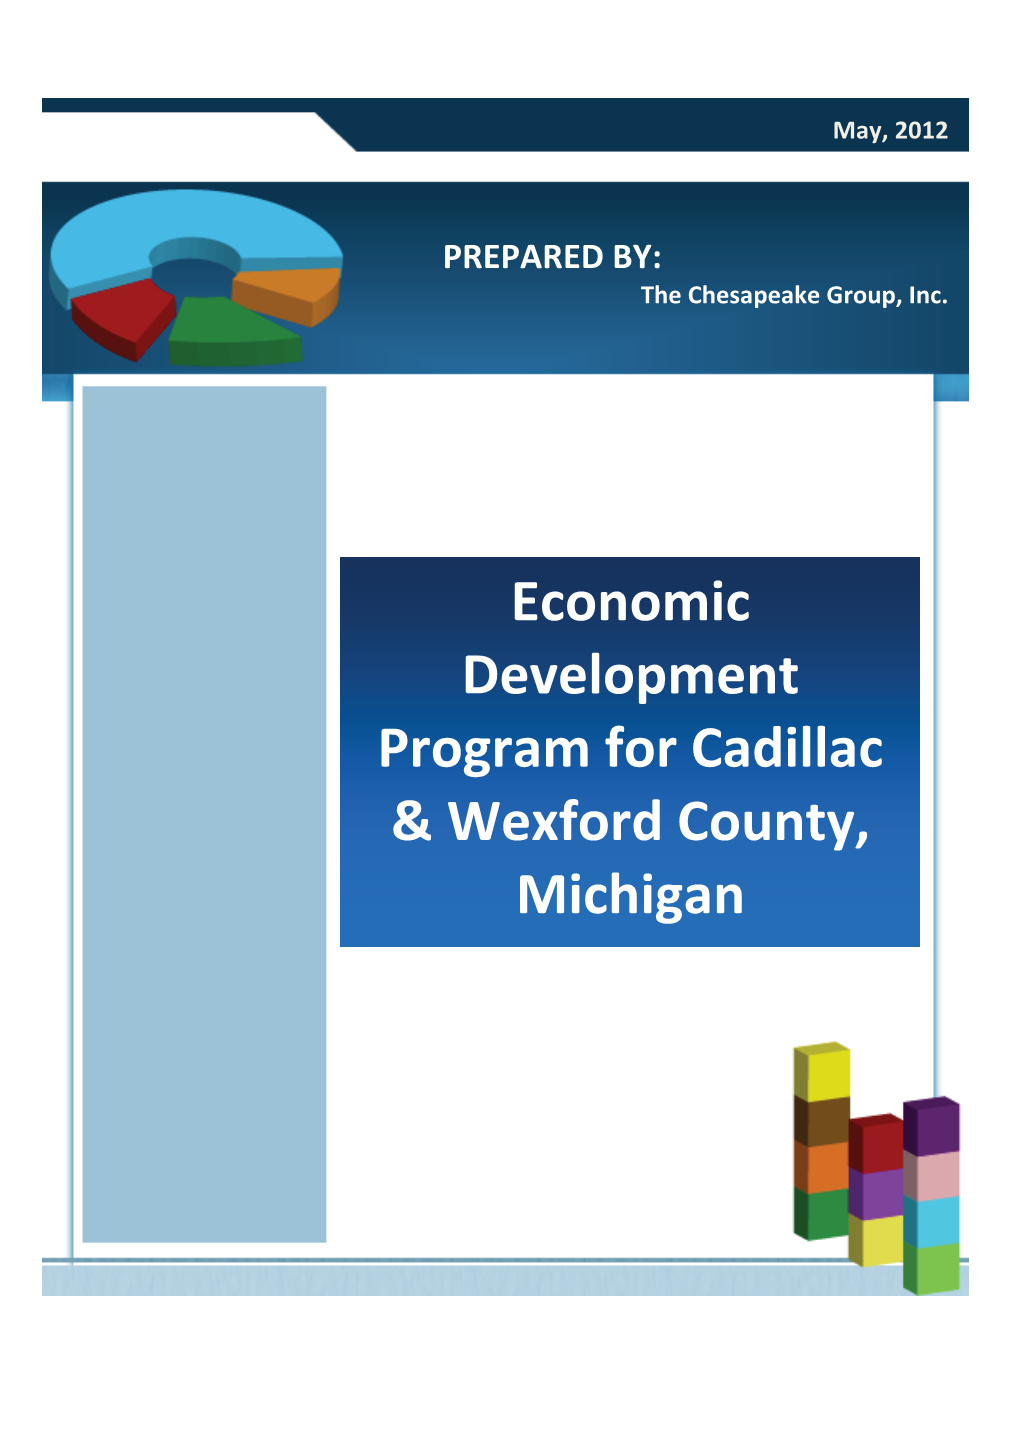 Economic Development Program for Cadillac & Wexford County, Michigan